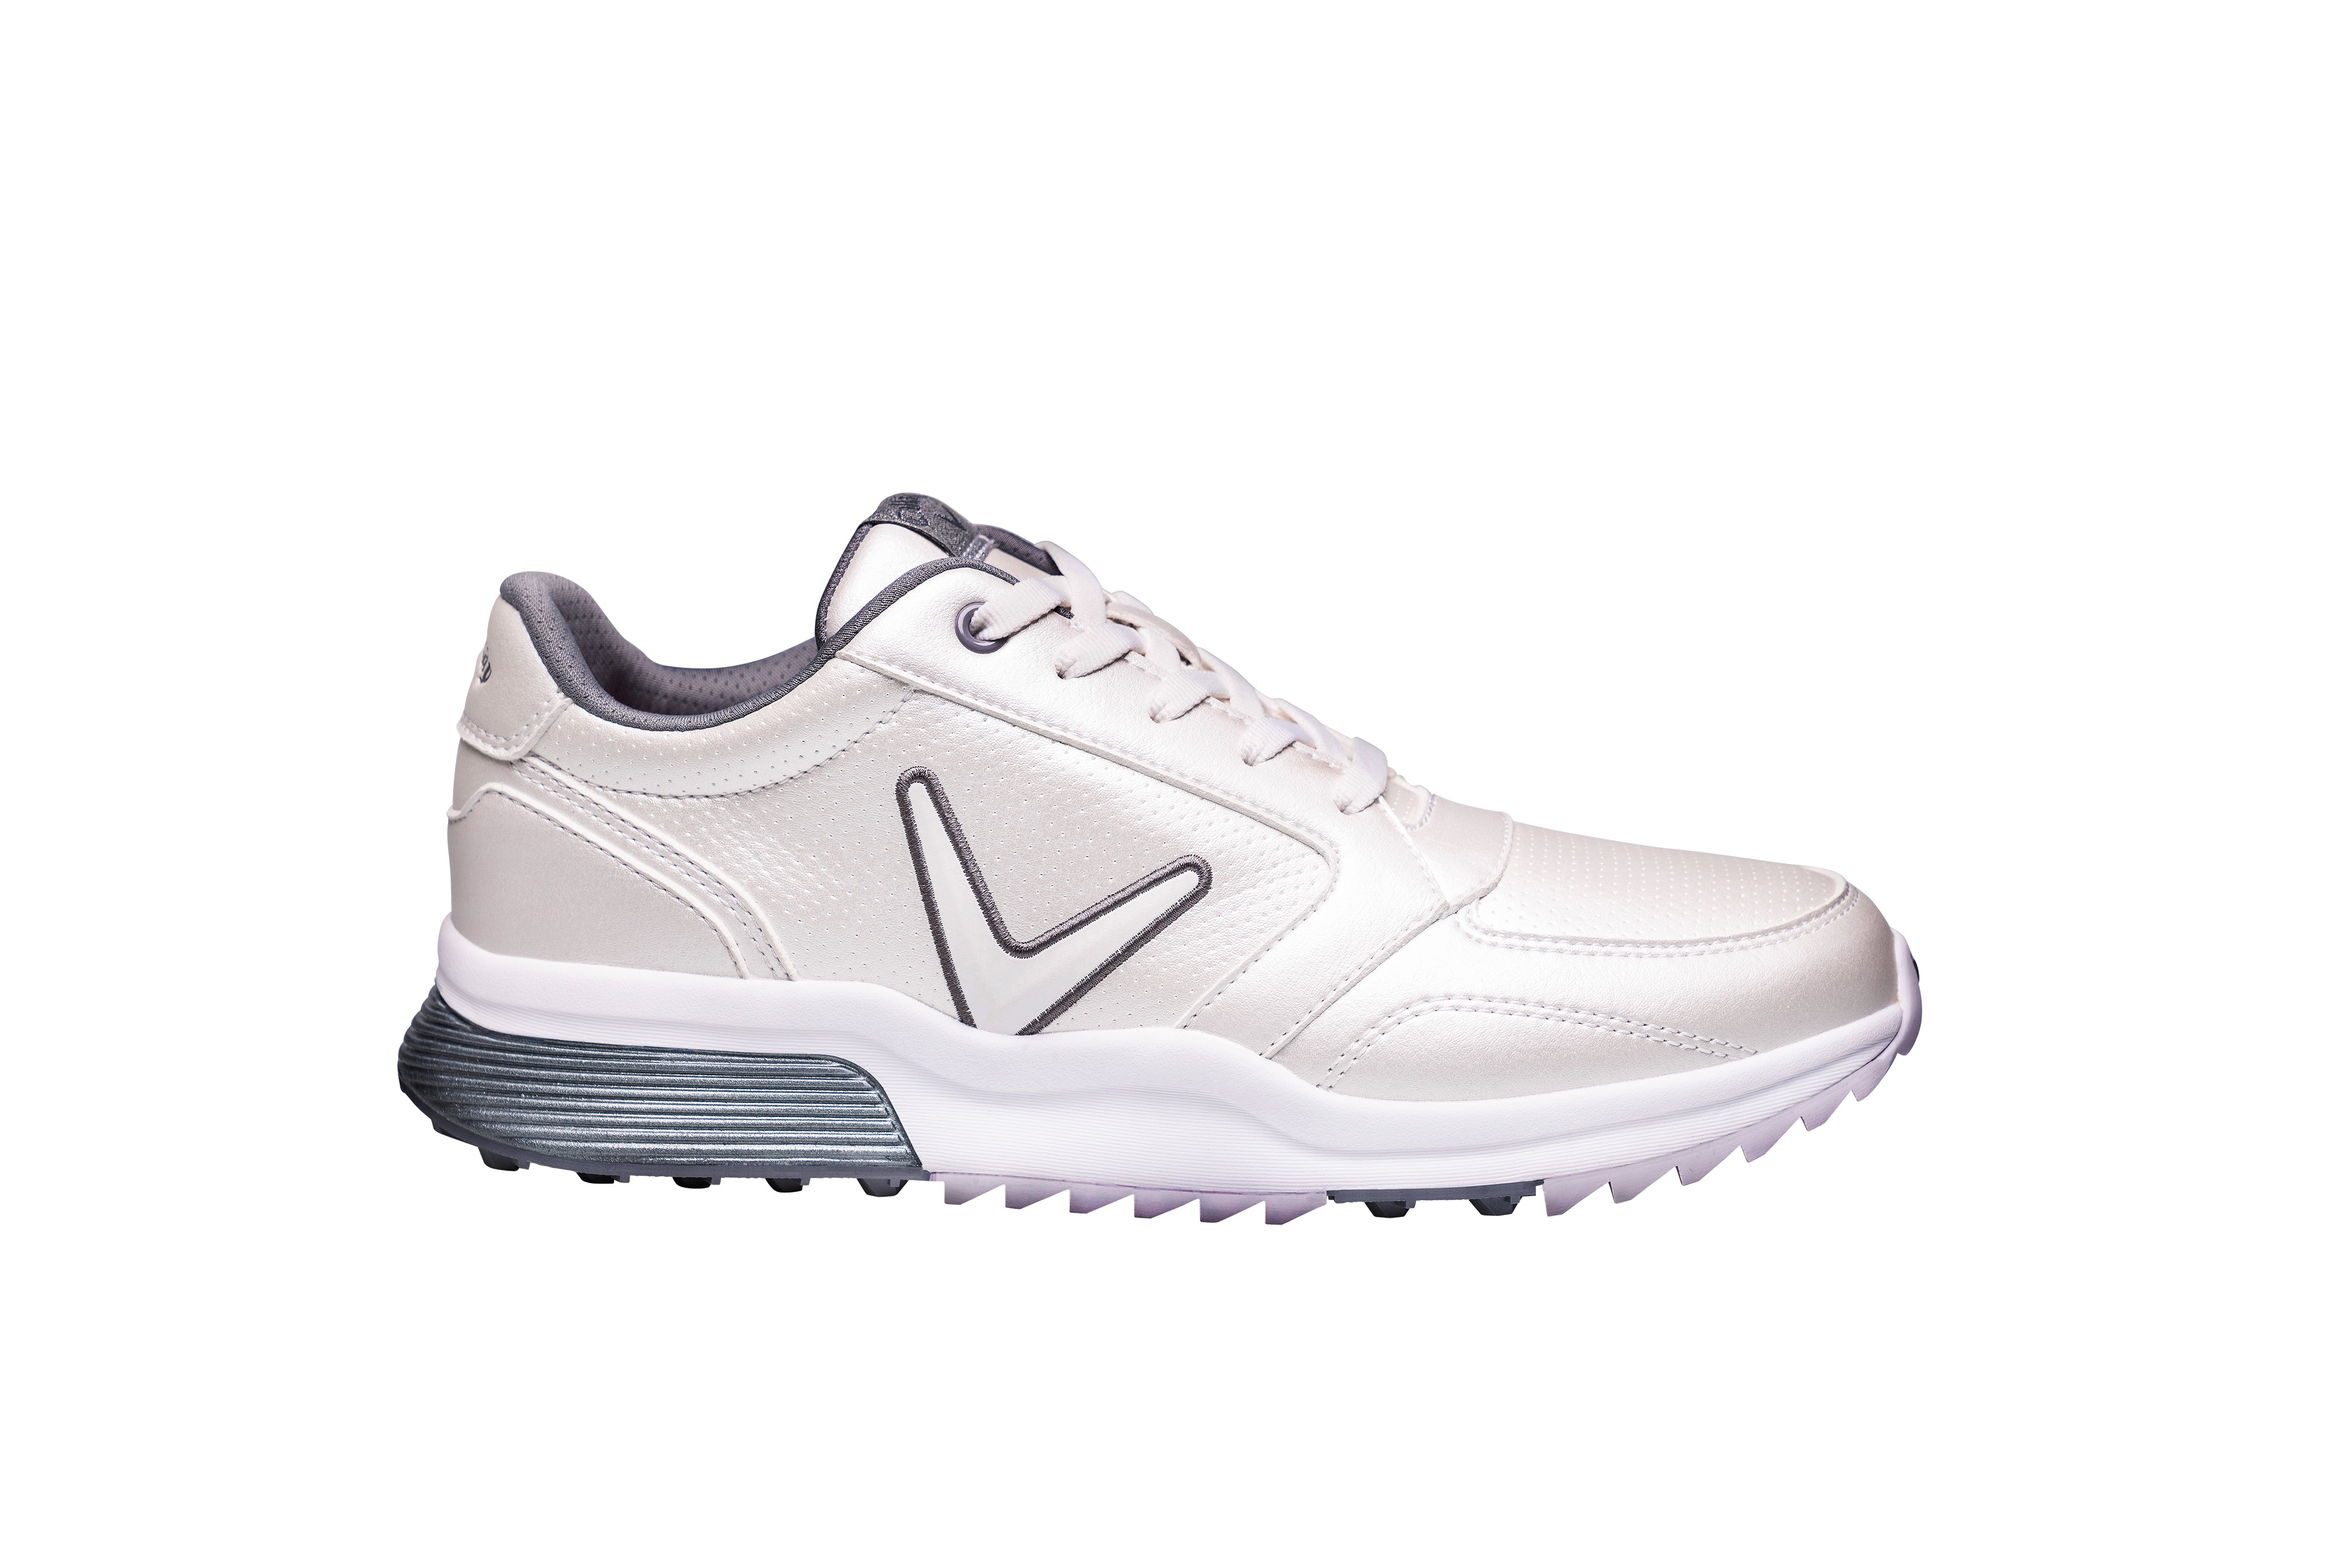 Callaway Aurora dámské golfové boty, perleťové/bílé, vel. 5,5 UK